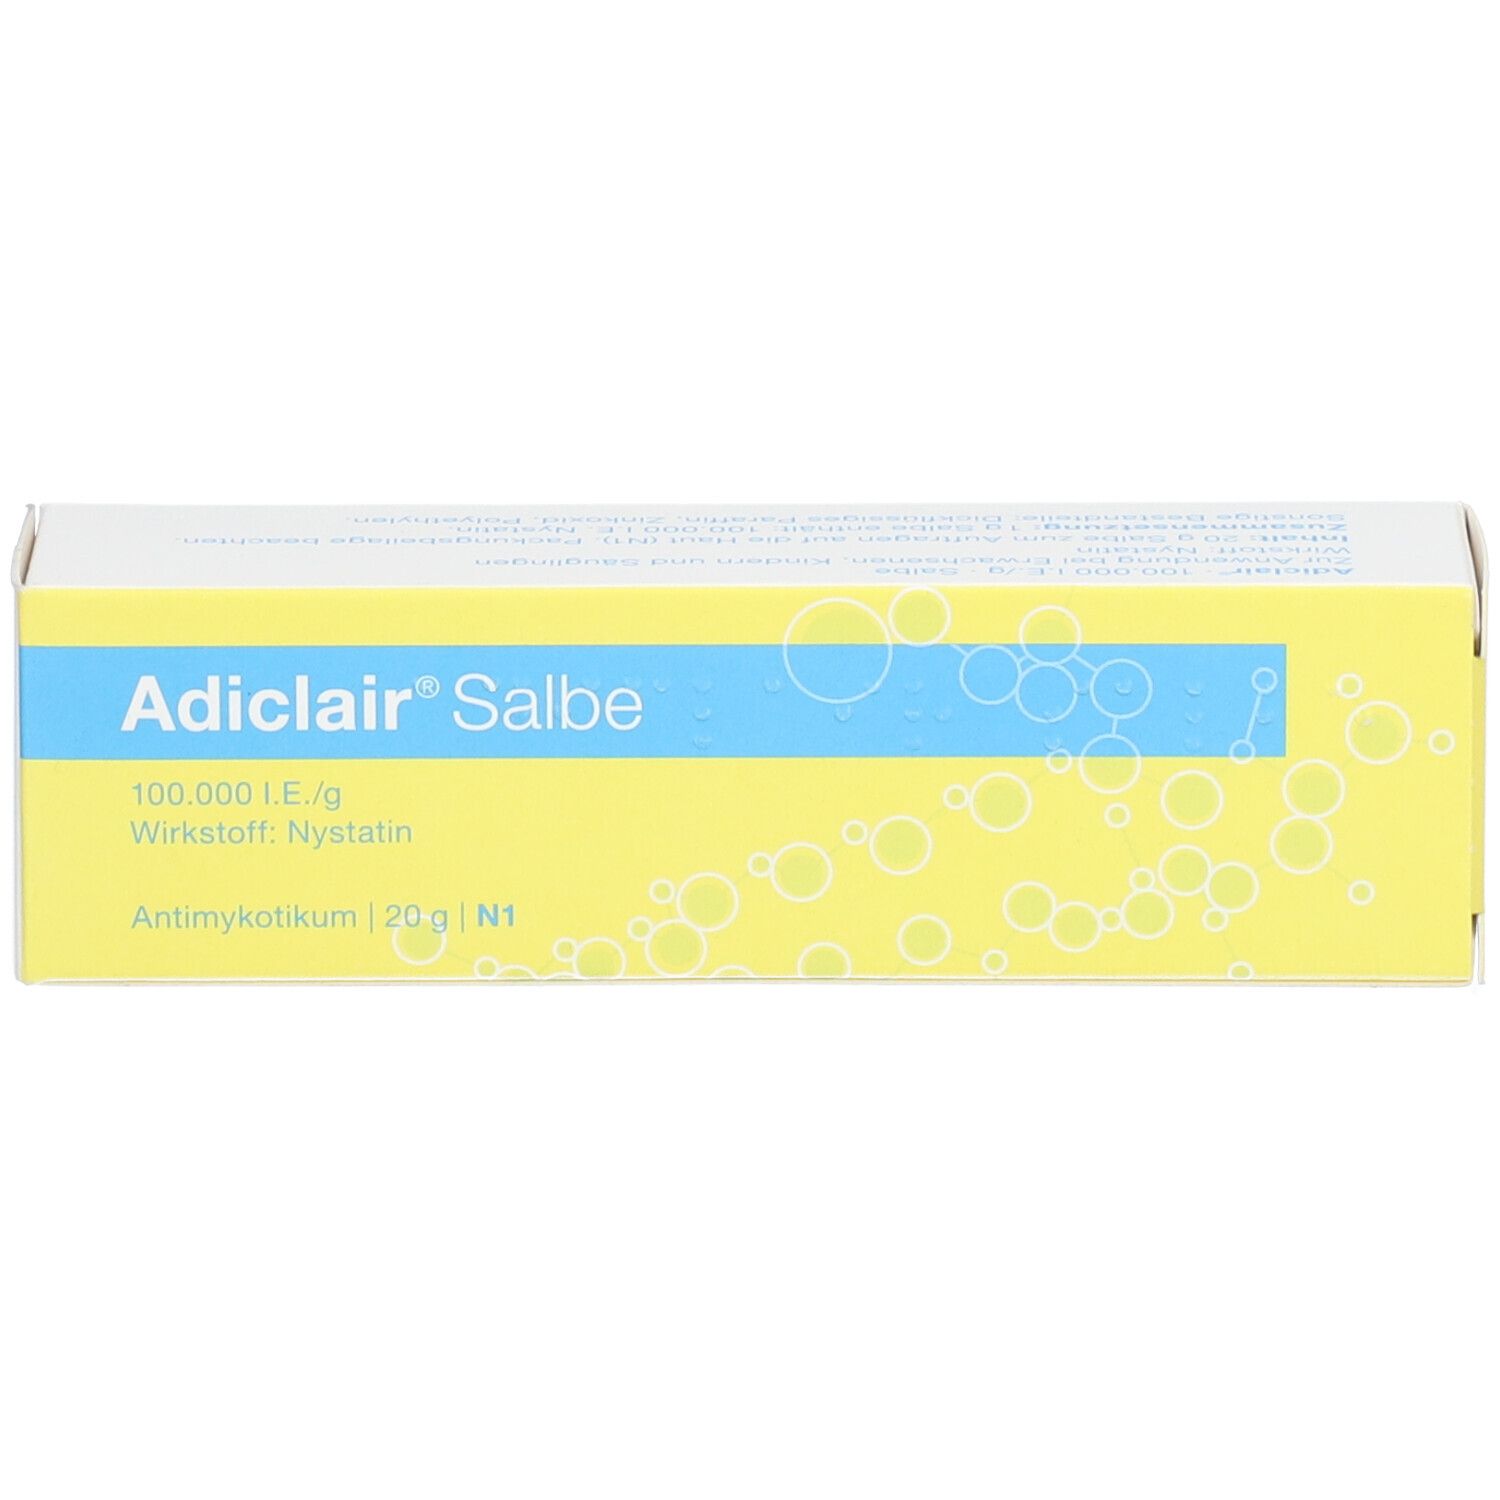 Adiclair® Salbe